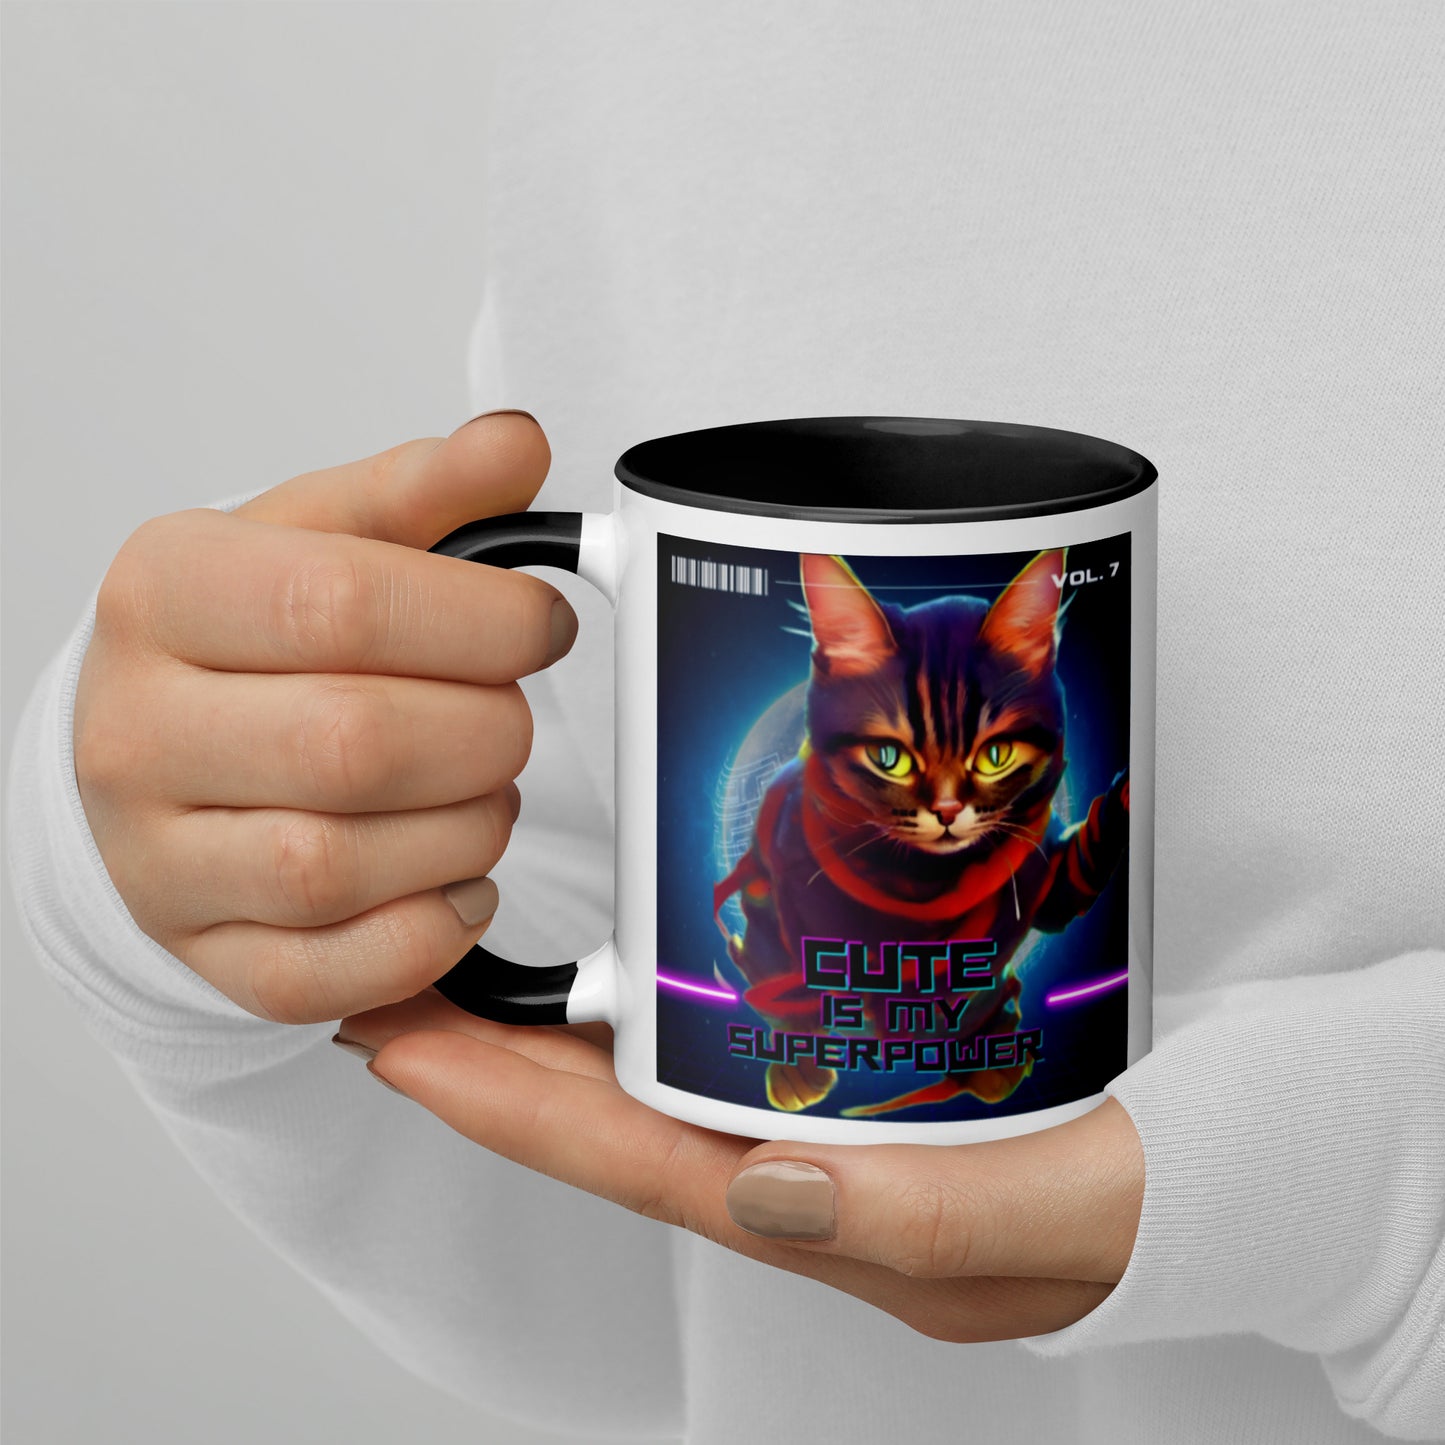 Colorful "Superpower" Mug